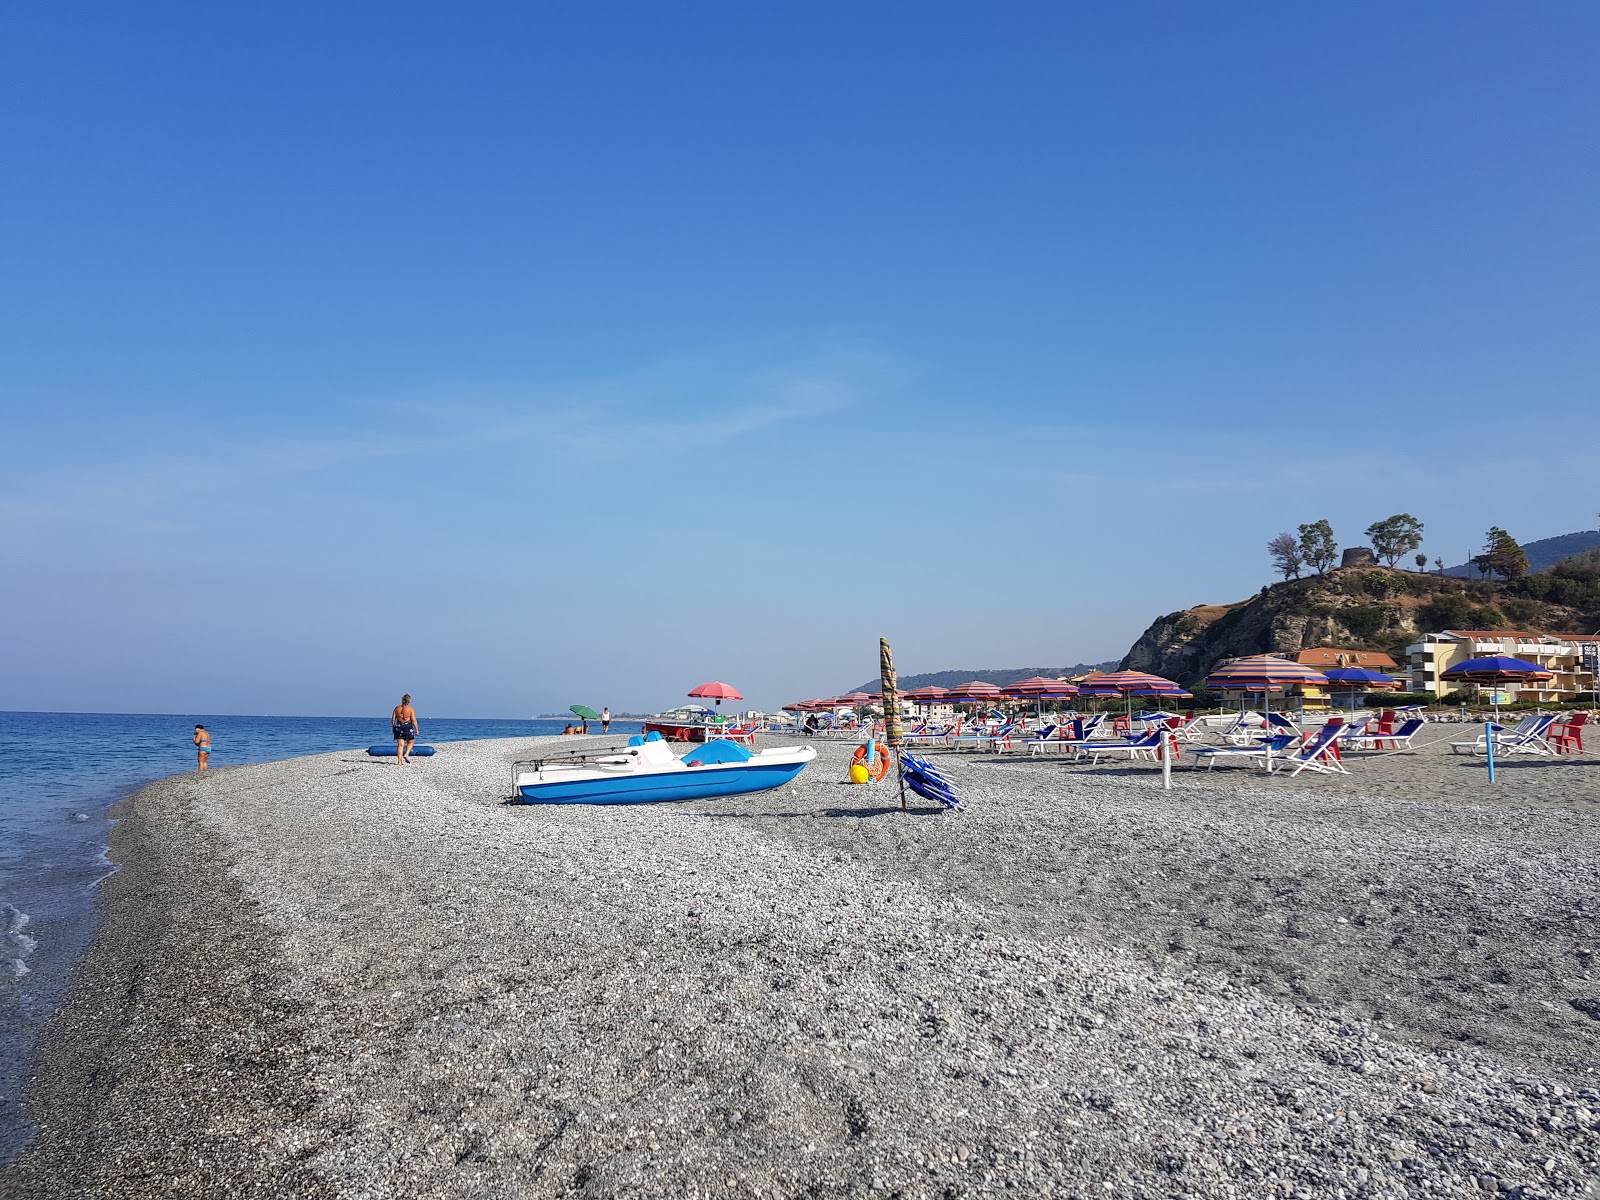 Fotografie cu Cartolano beach cu o suprafață de apa albastra